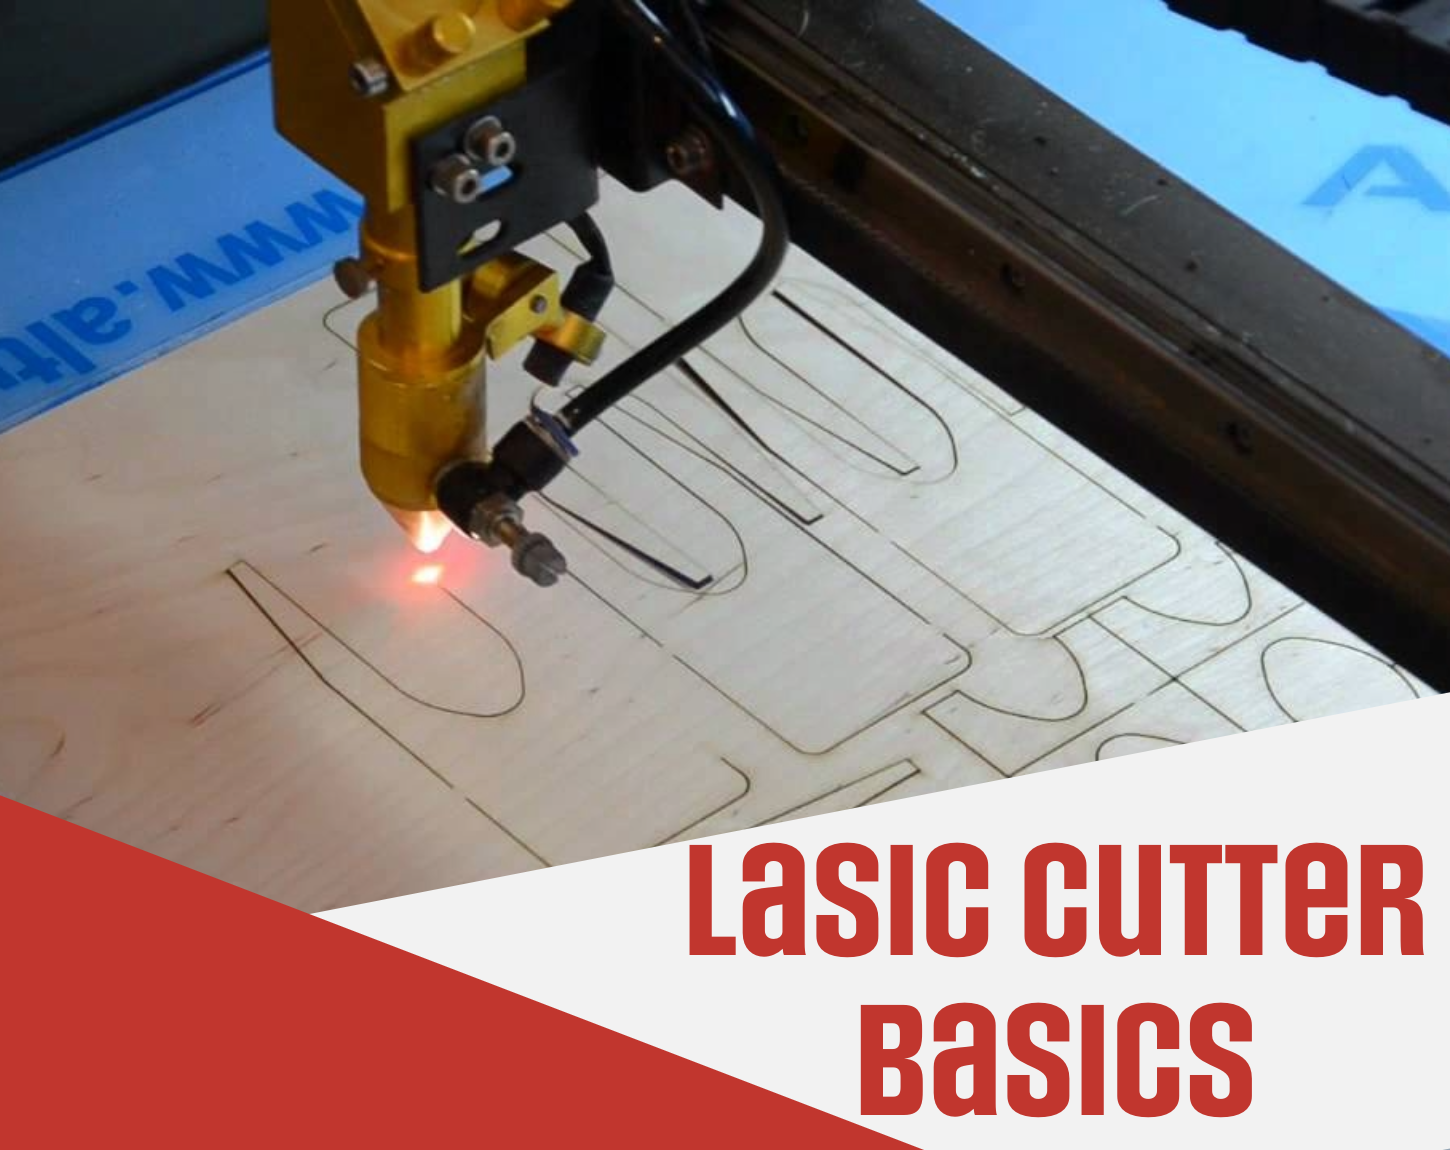 Laser Cutter Basics